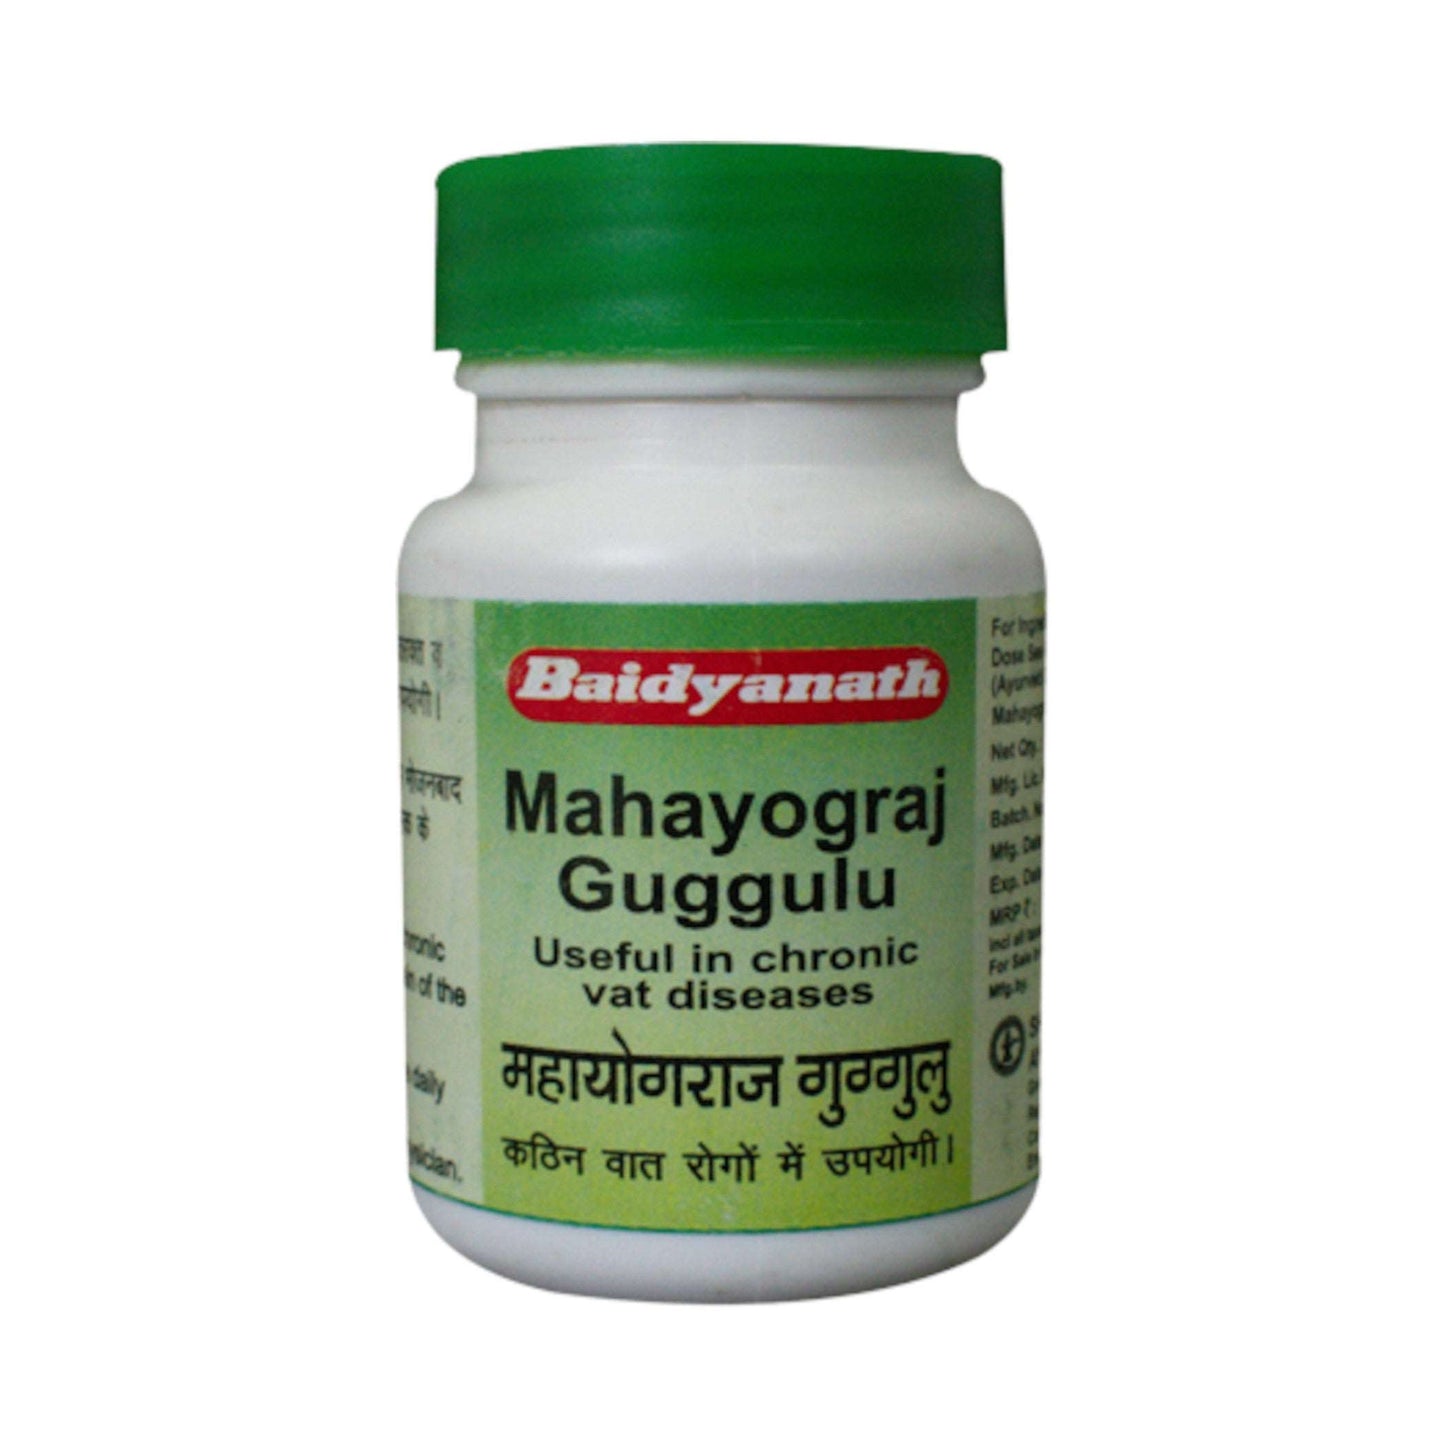 Baidyanath Mahayograj Guggul 40 Tablets - An Ayurvedic supplement for various health benefits.